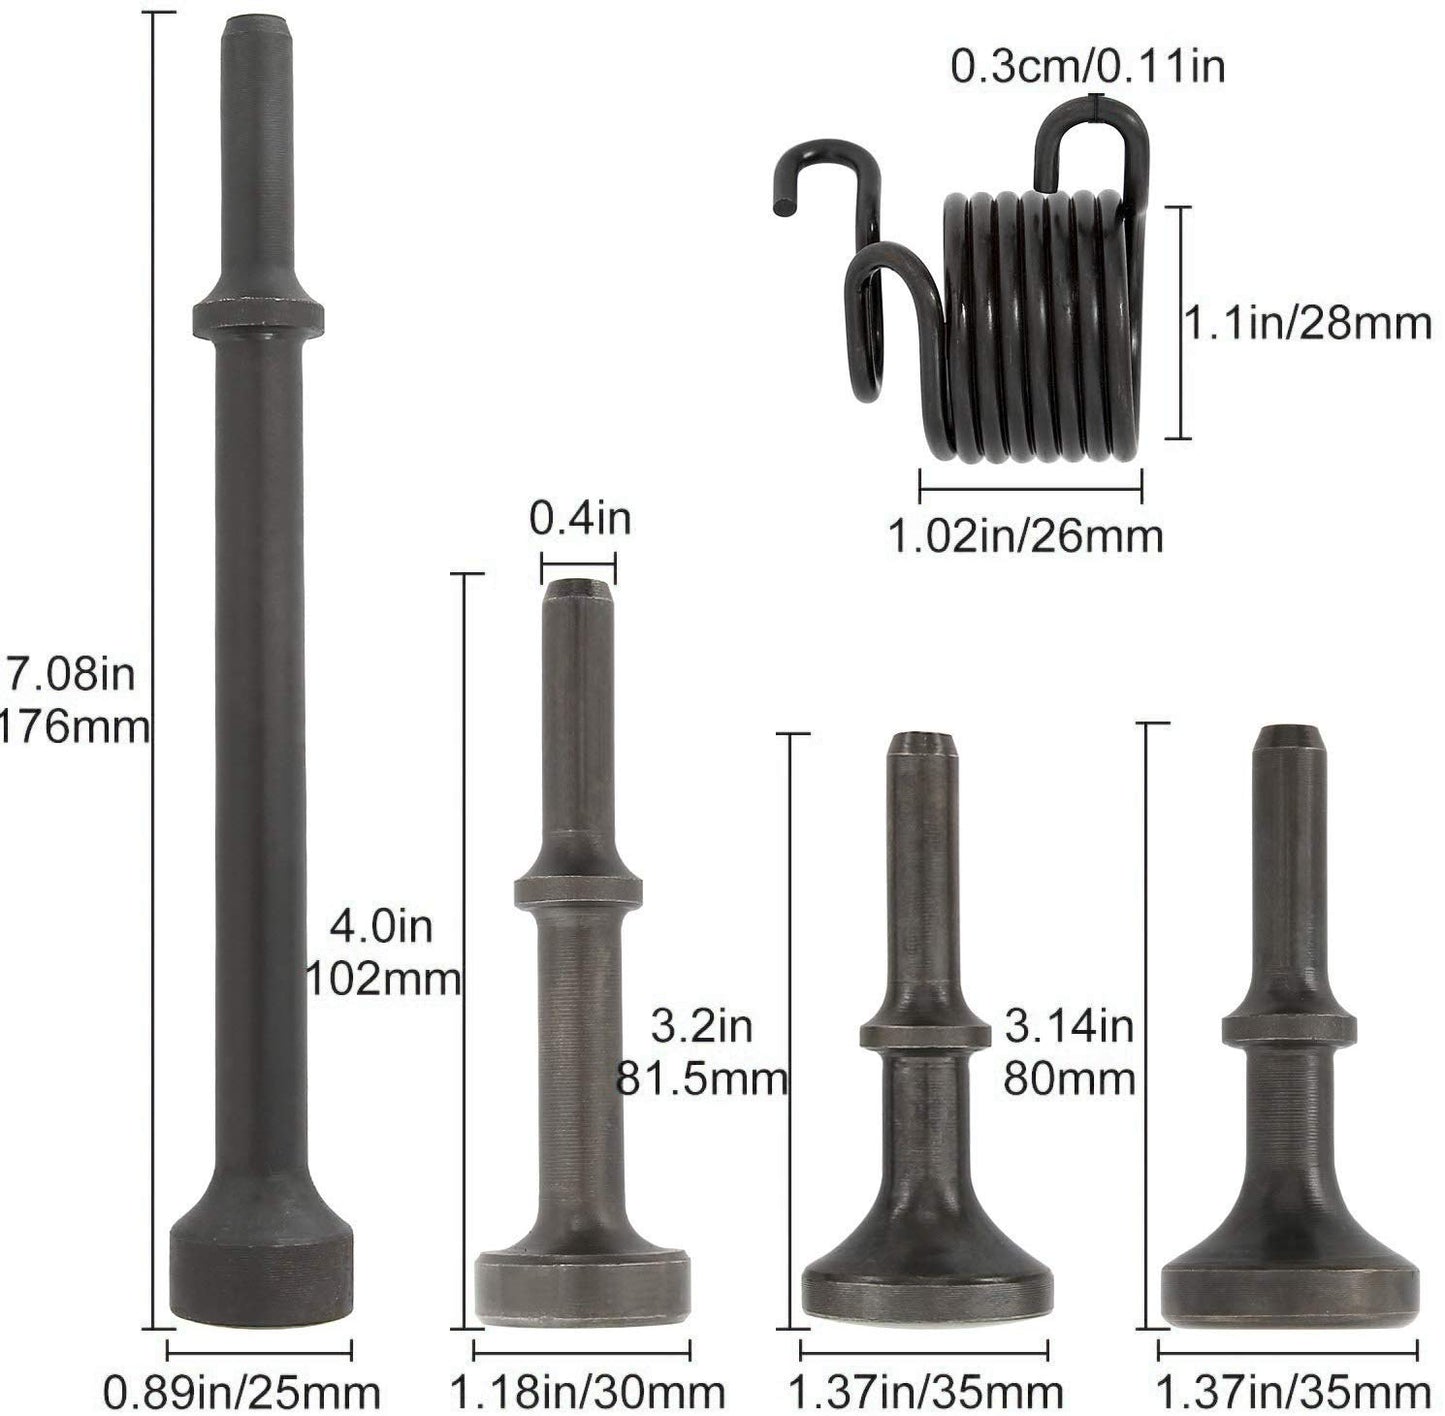 5 Pcs Air Hammer Bits Set, 0.401 Shank Smoothing Pneumatic Air Hammer Pneumatic Chisel Bits Tools Kit, Extended Length Hammer Tool With Spring.